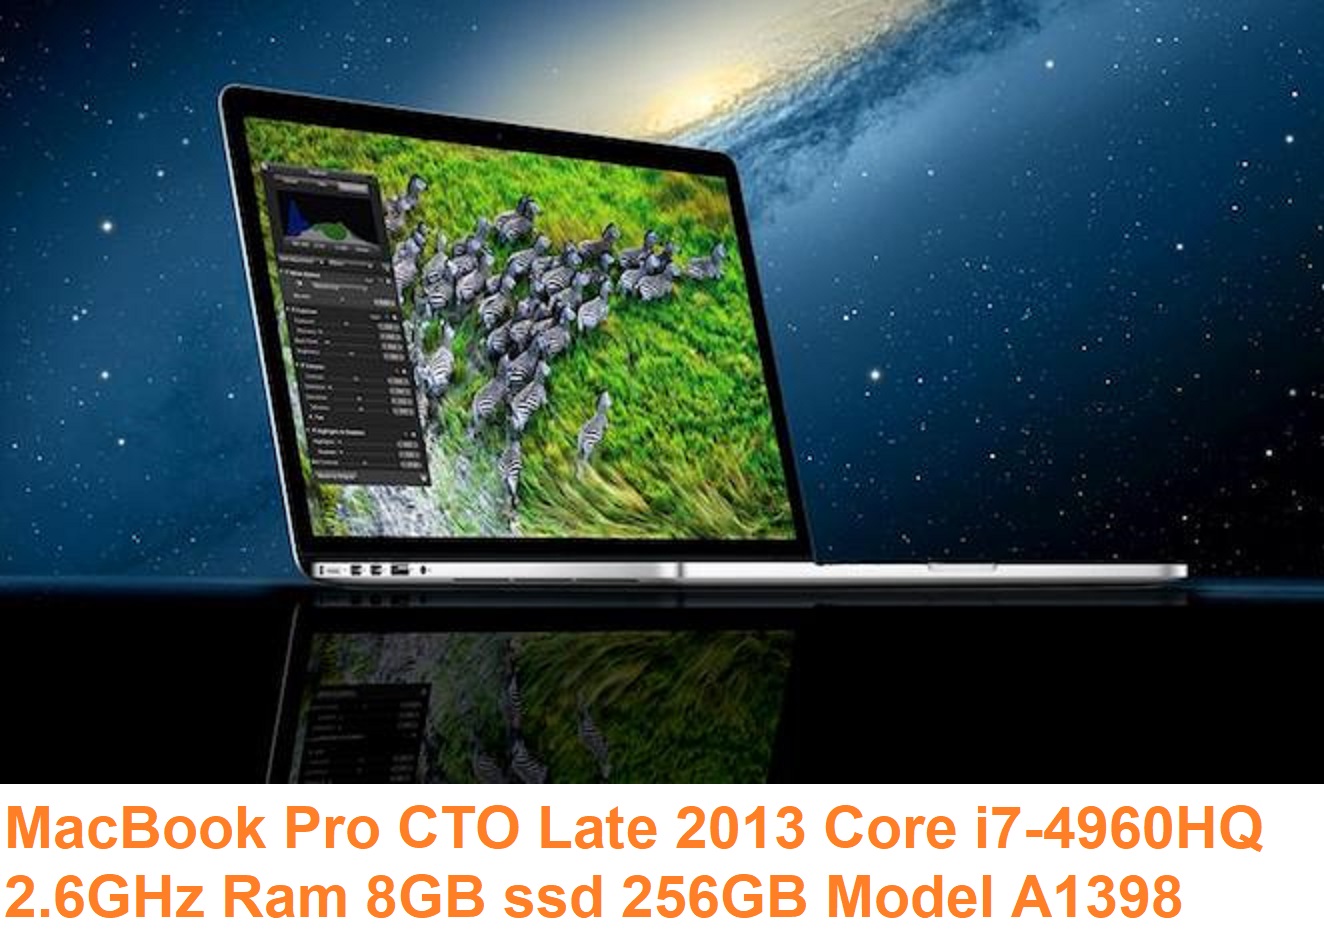 MacBook Pro CTO Late 2013 Core i7-4960HQ 2.6GHz Ram 8GB apple ssd 256GB Model A1398 (EMC 2674)